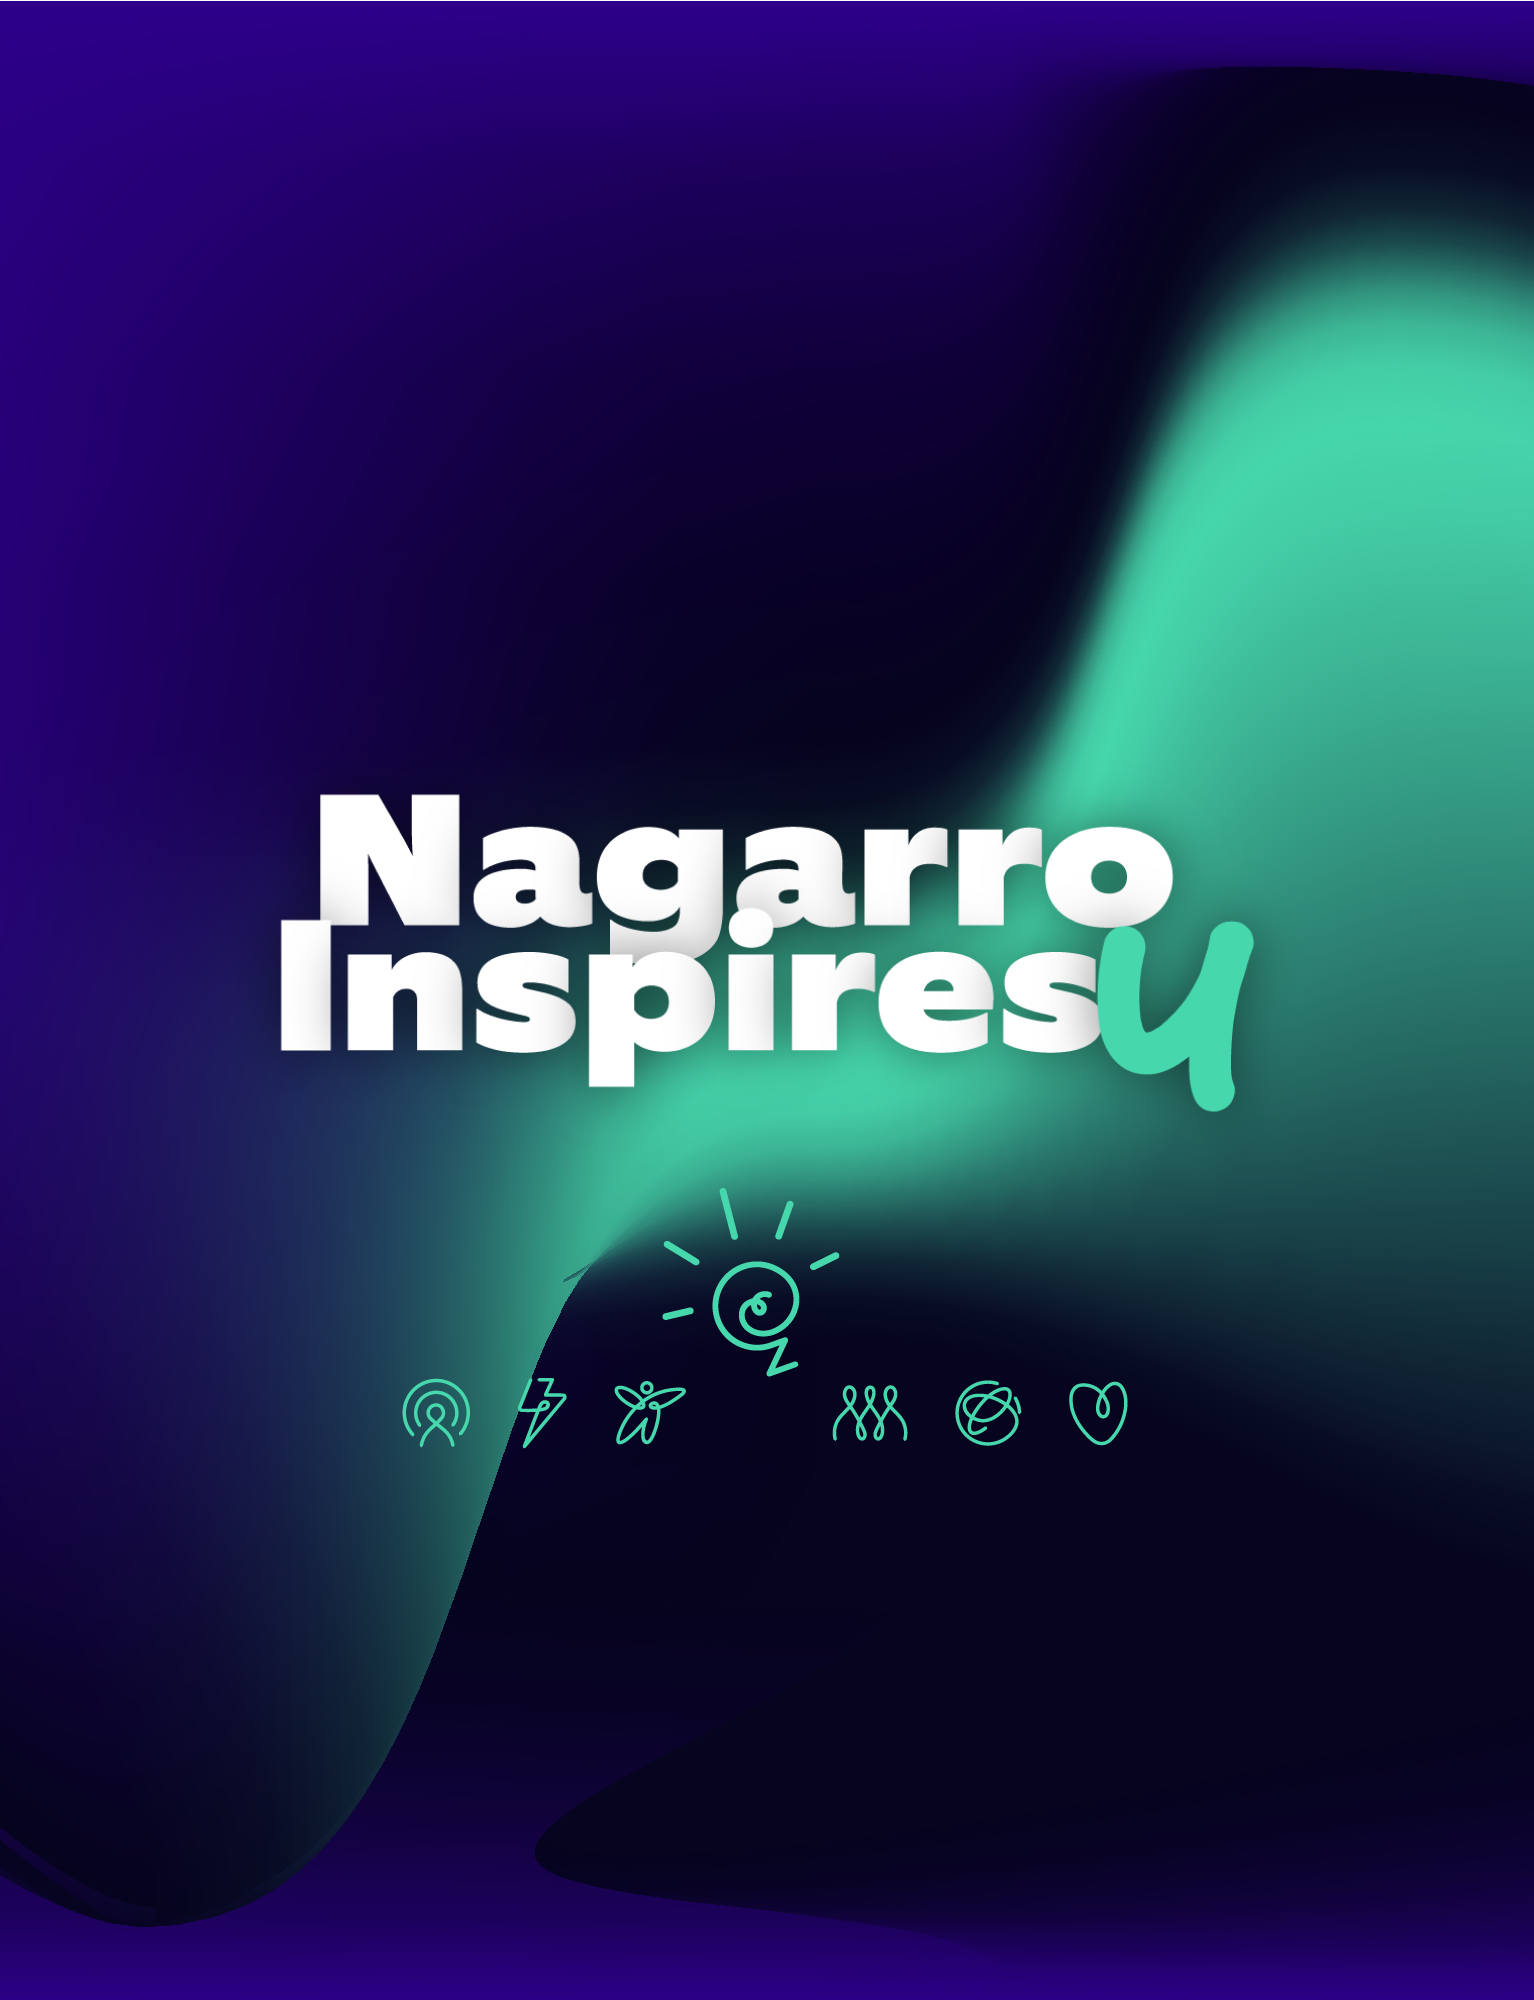 Nagarro-inspires-U-illustrative-banner-for-mobile-with-NagarroInspiresU-text-and-multicolor-image